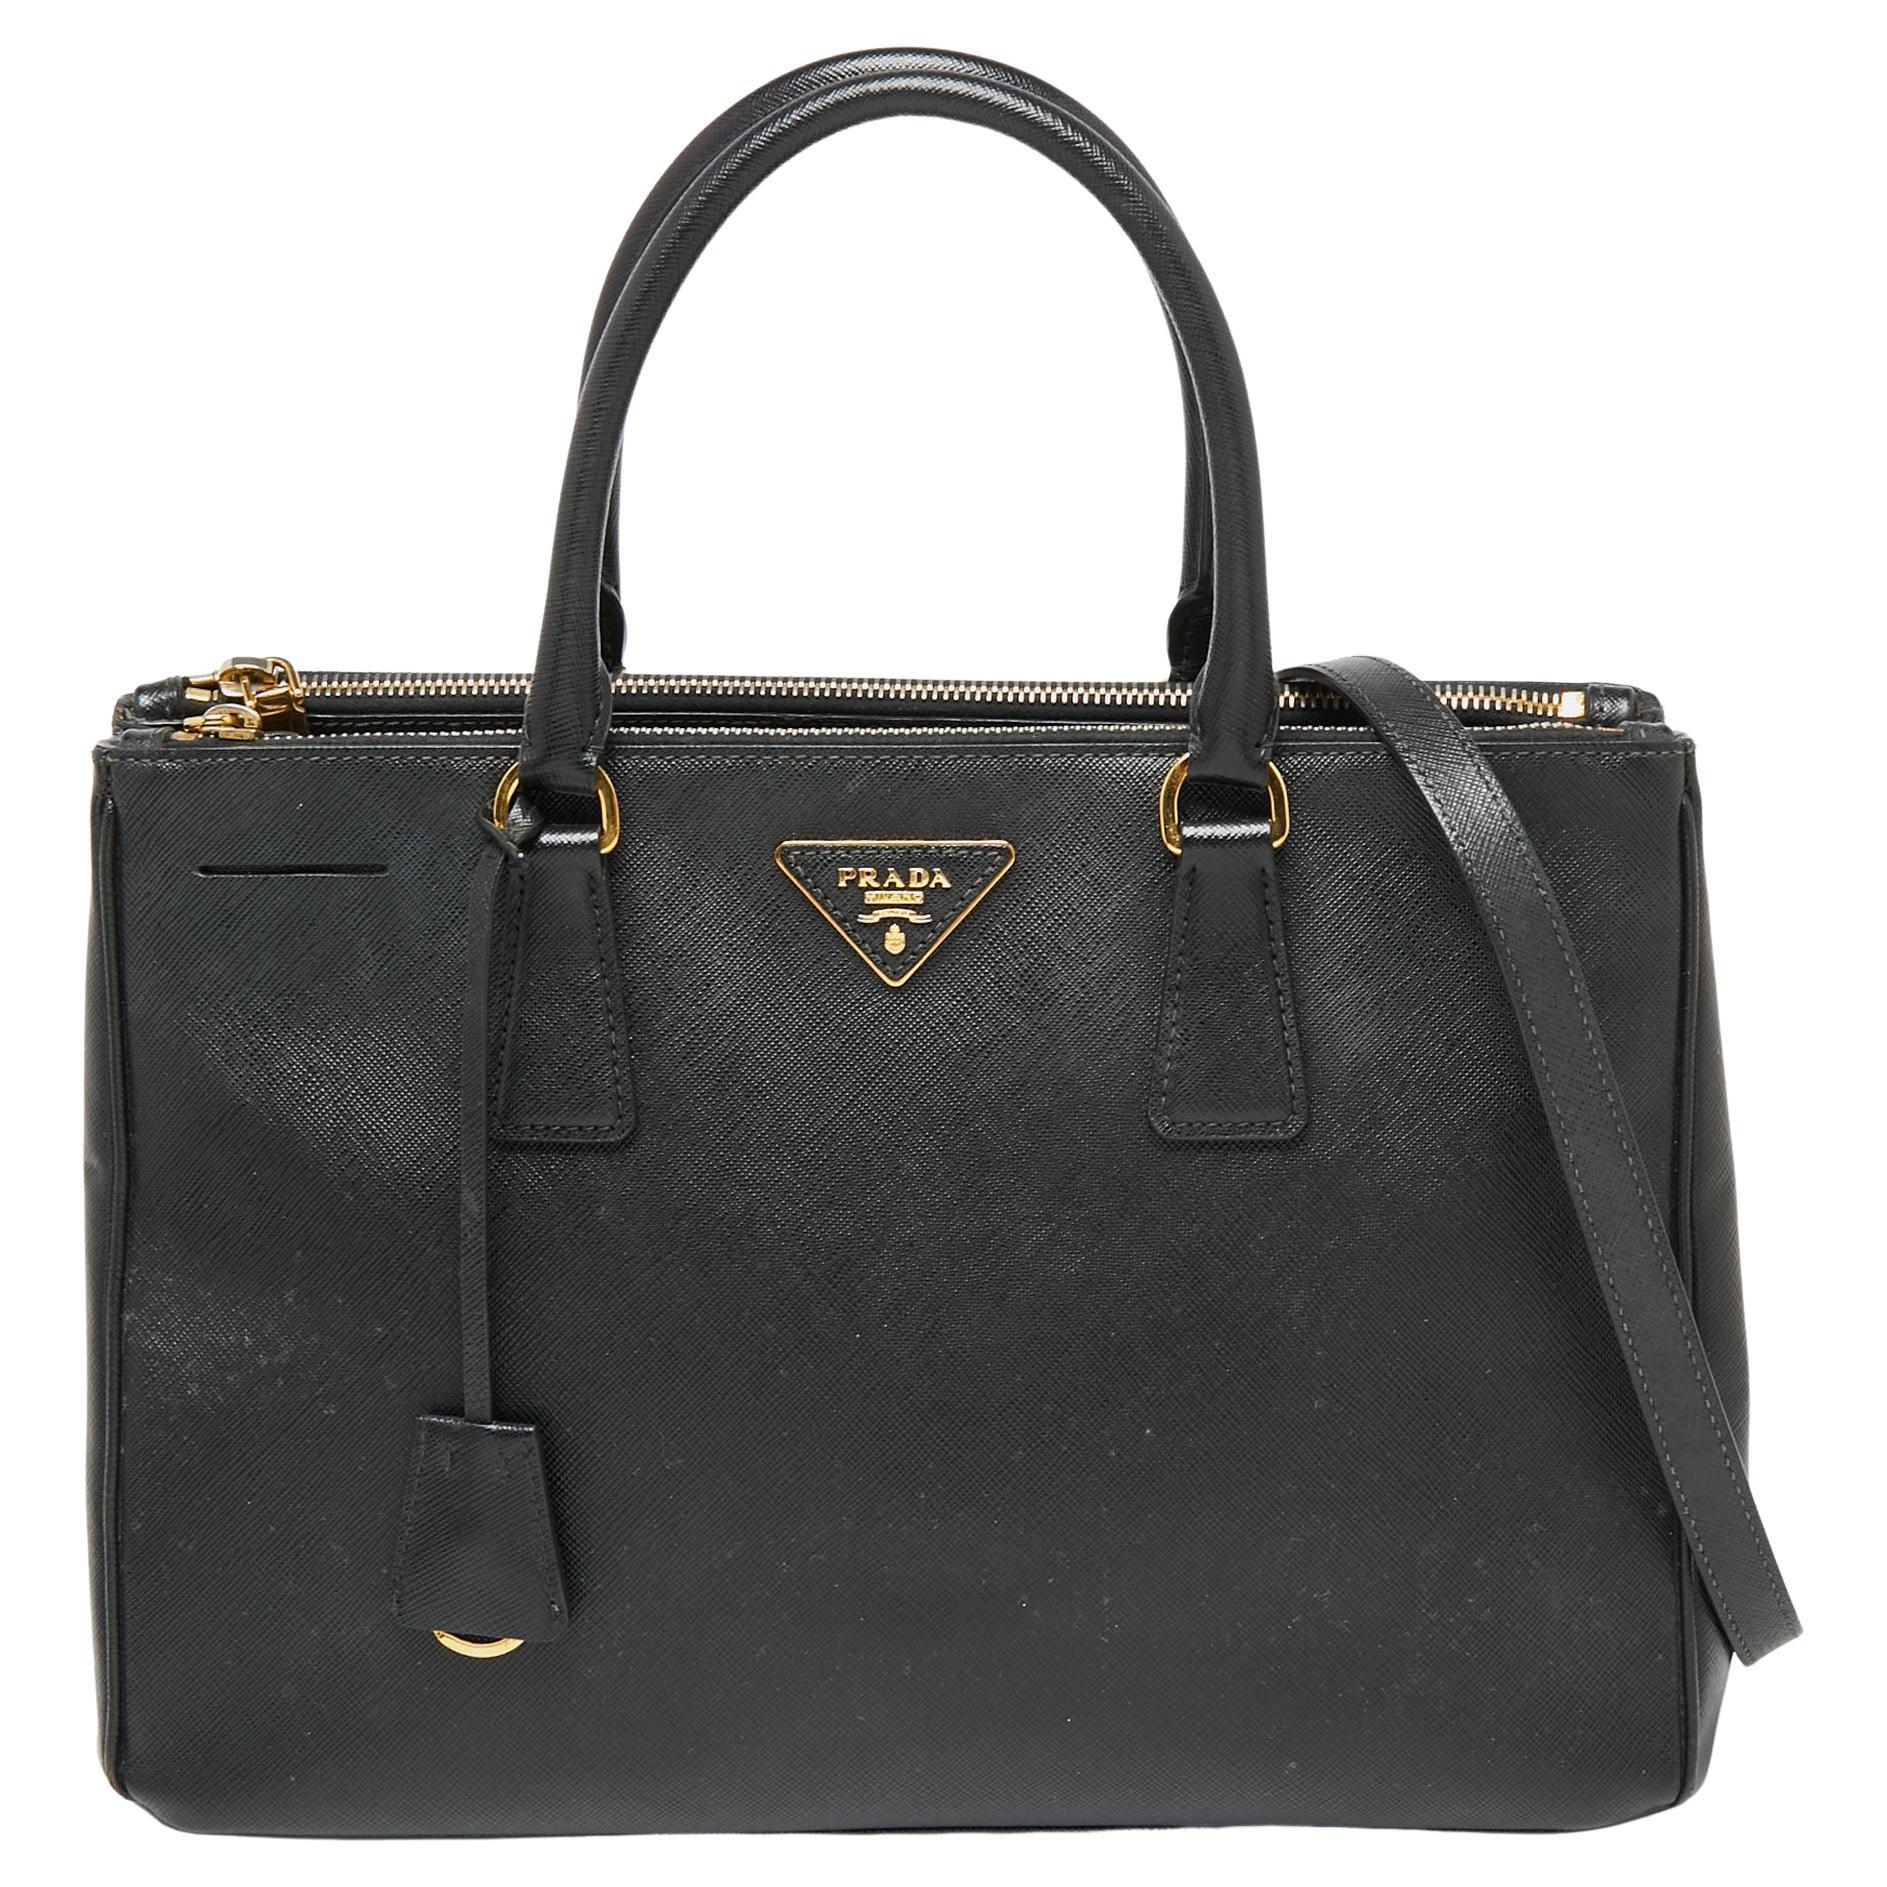 Prada Large Galleria Saffiano Leather Bag